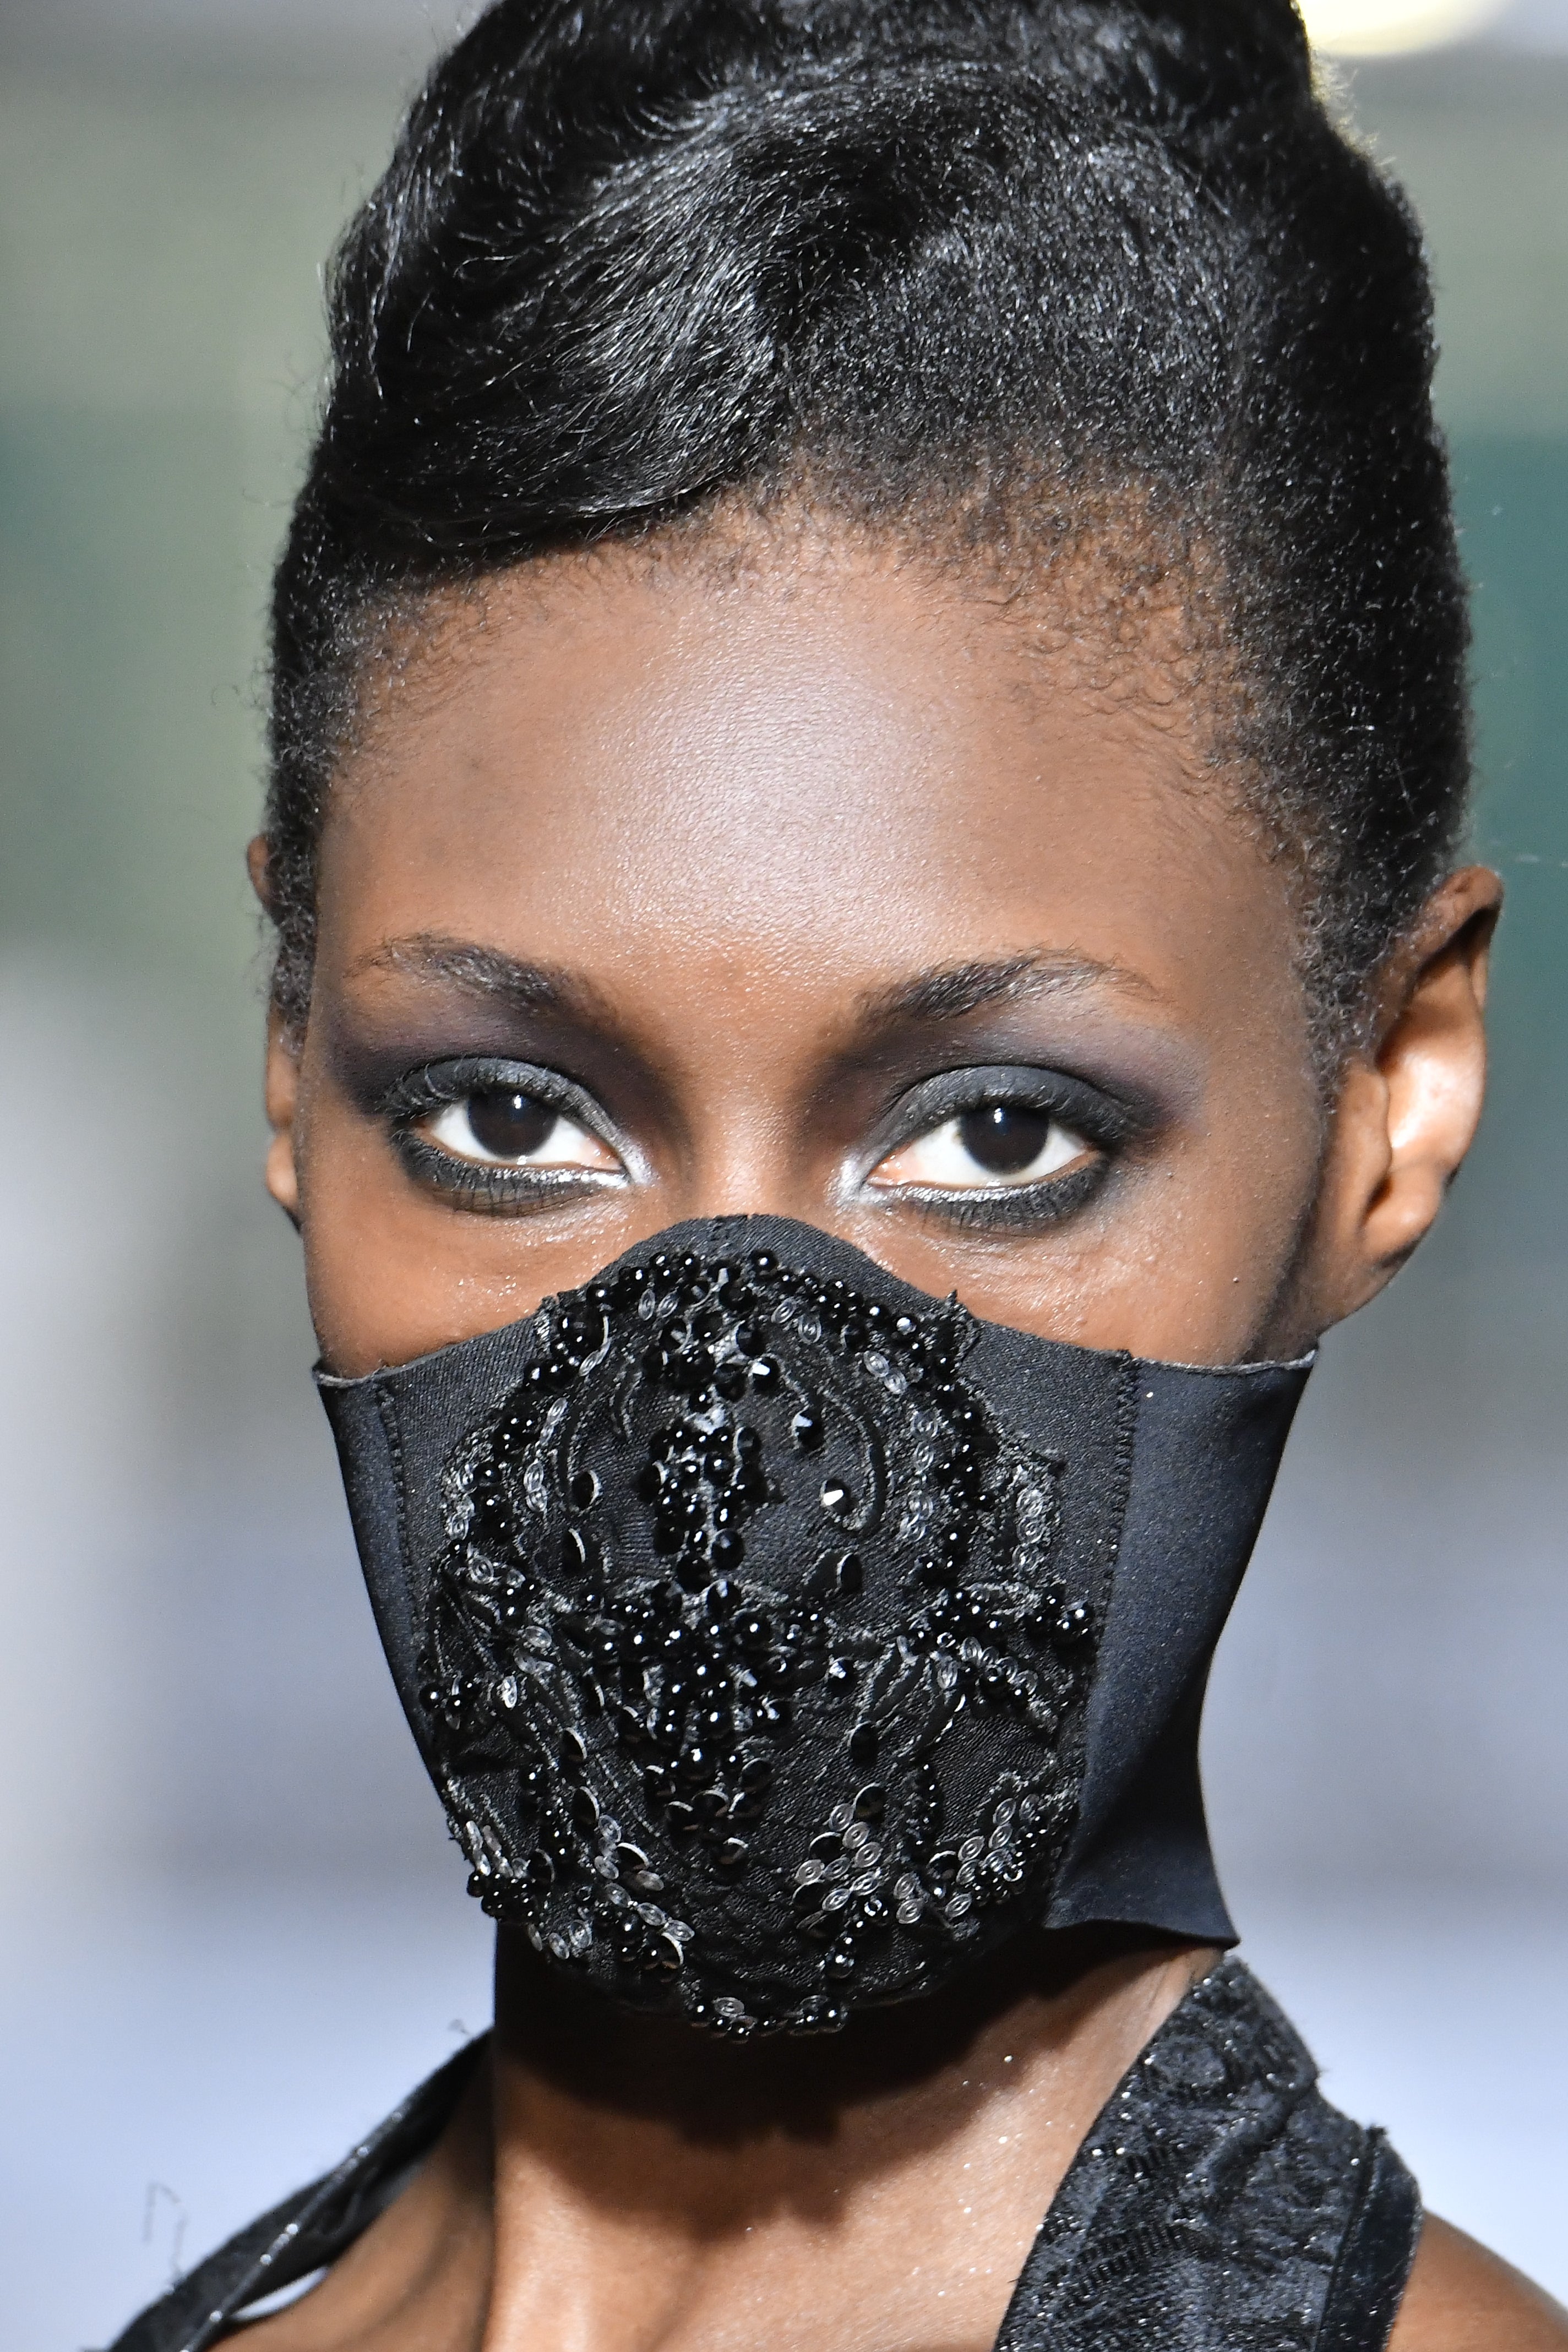 30 Photos That Prove Black Girls Slayed the Paris Haute Couture Runways
